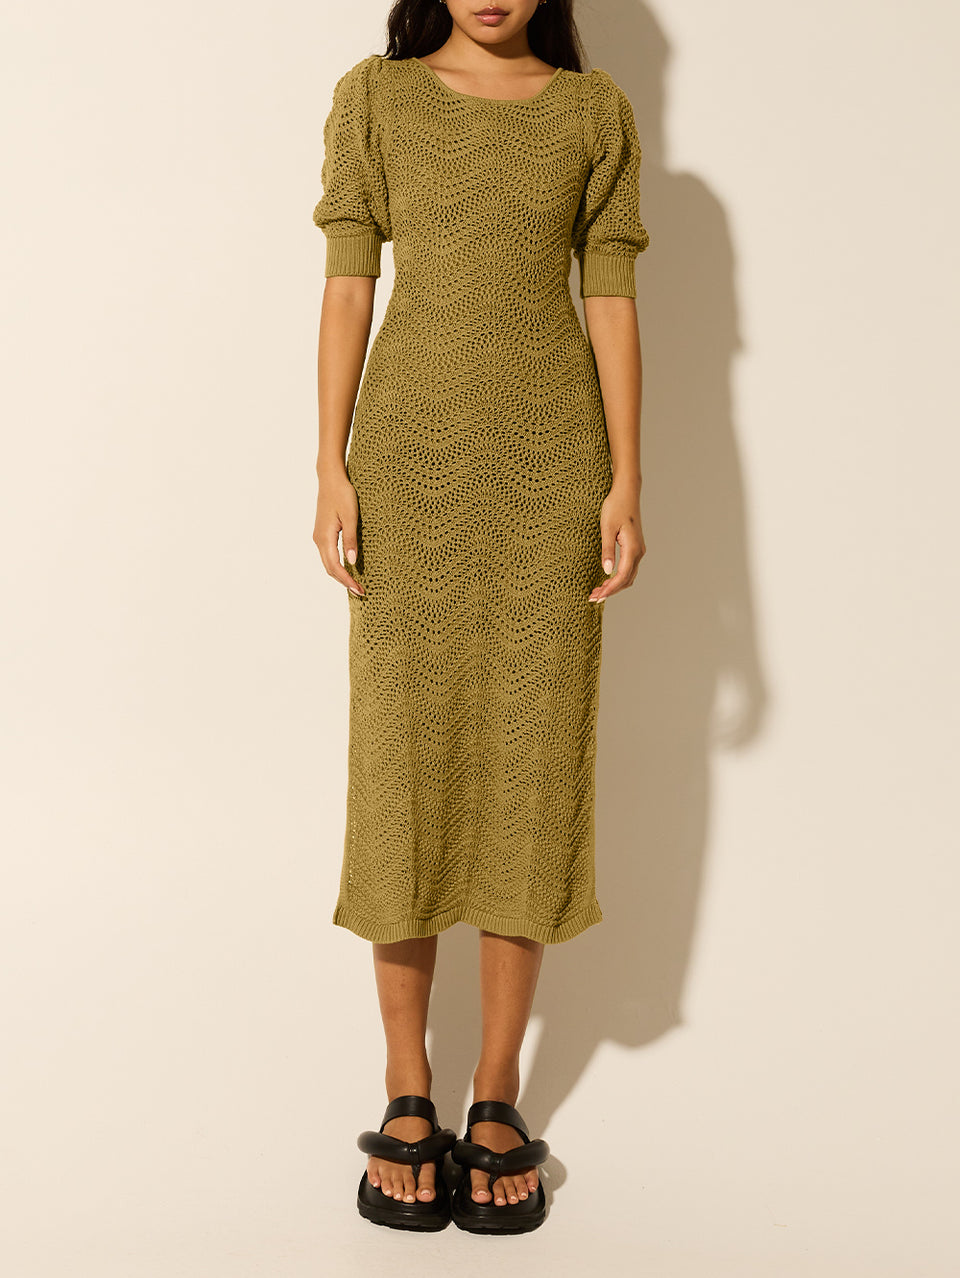 Mariana Knit Midi Dress Khaki KIVARI | Model wears khaki knit midi dress